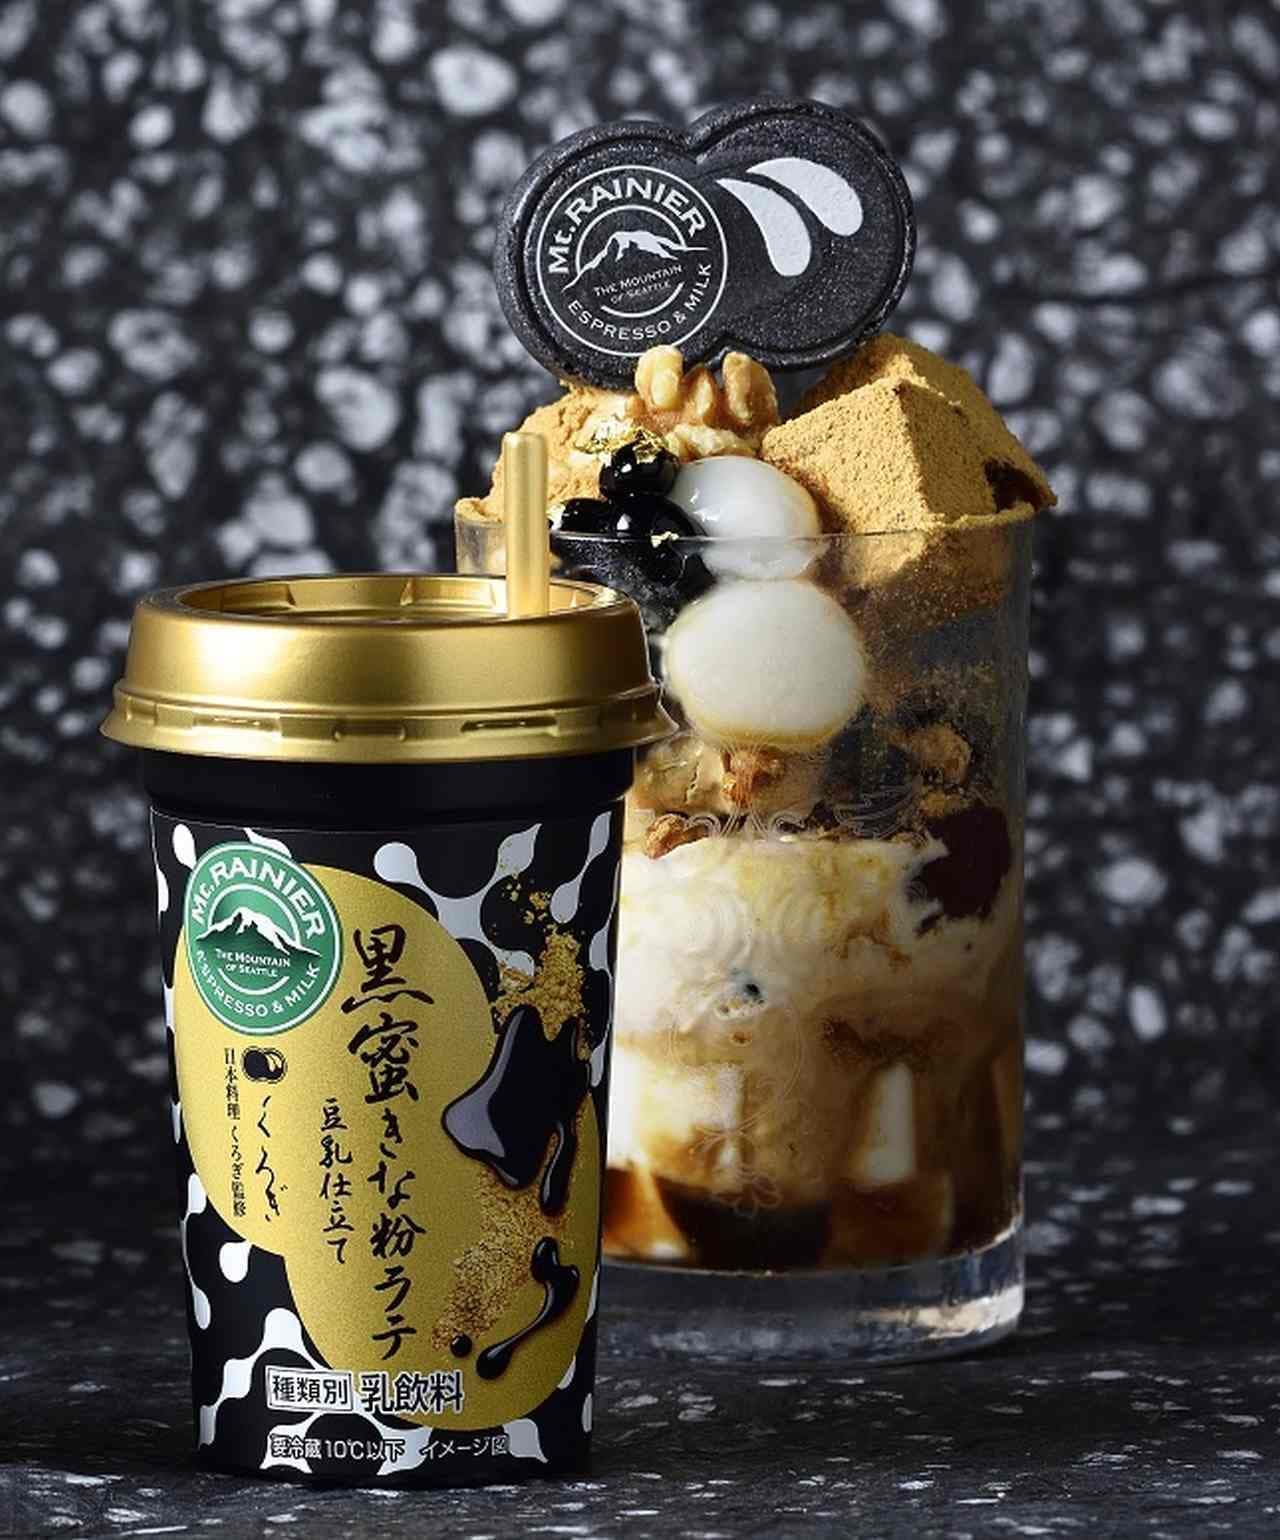 Limited time offer "Mount Rainier Kuromitsu Kinako Latte"